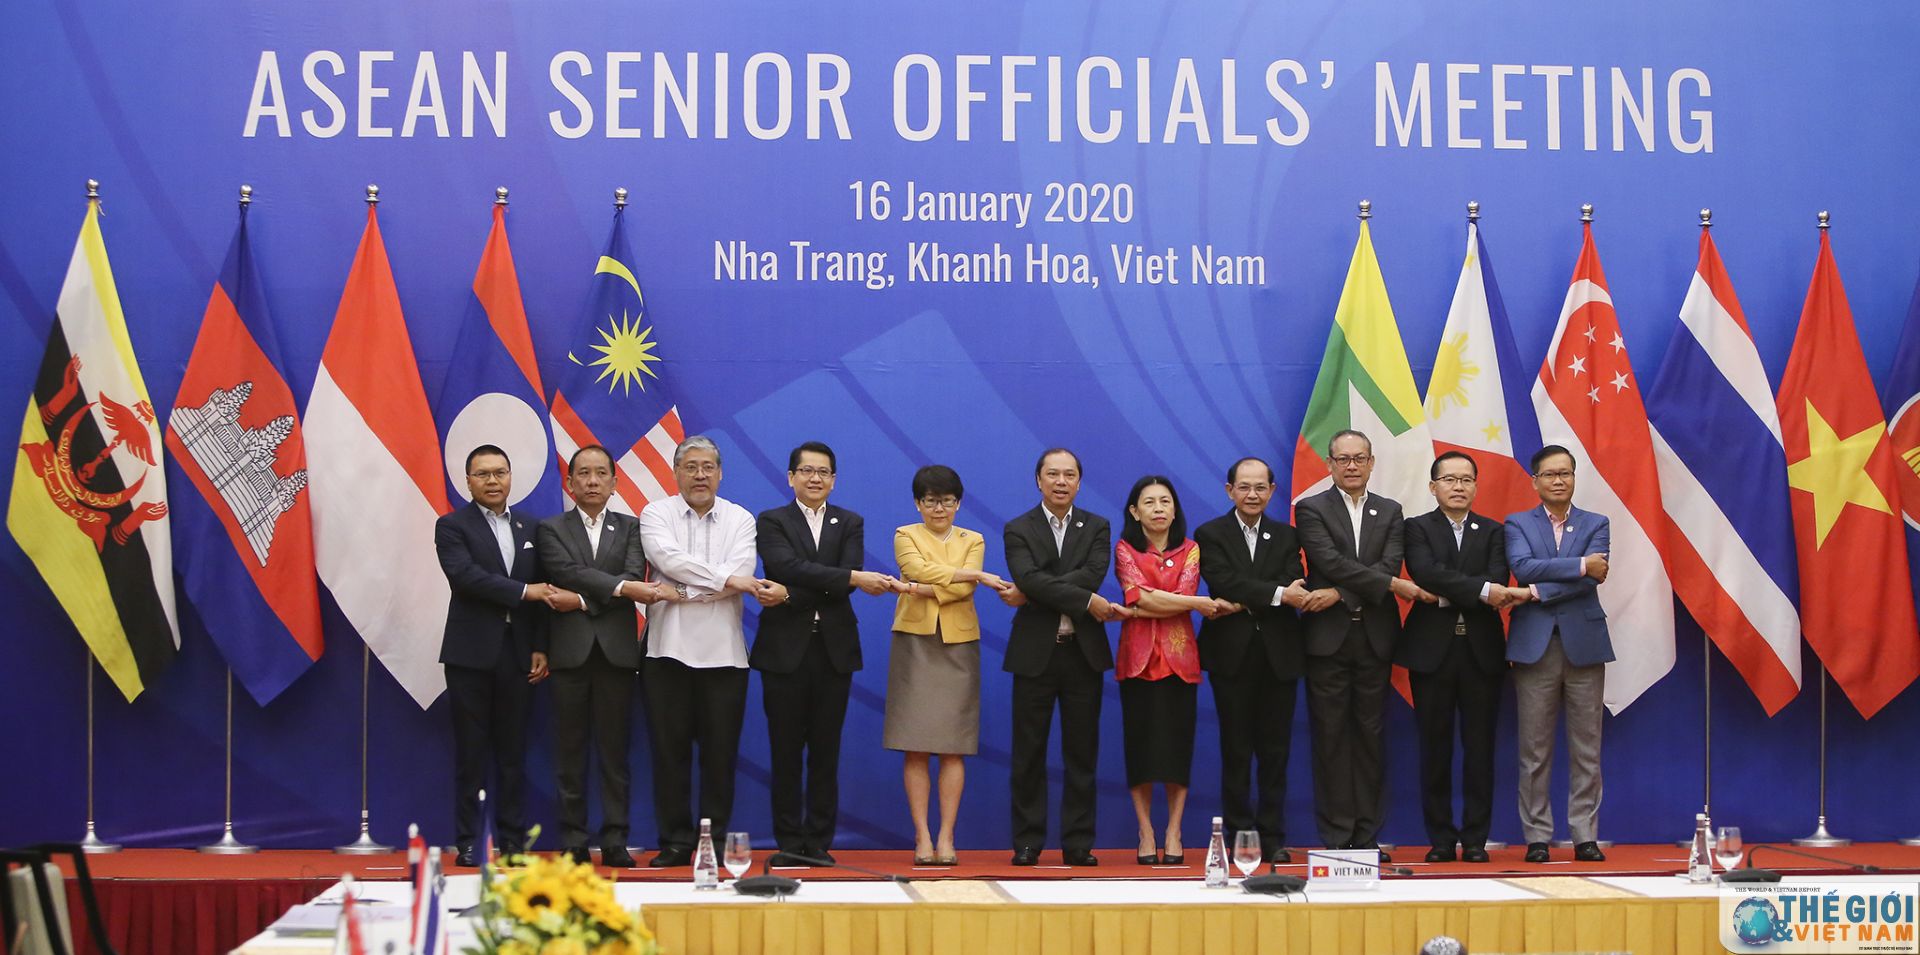 us senators congratulate vietnam on assuming asean chairmanship